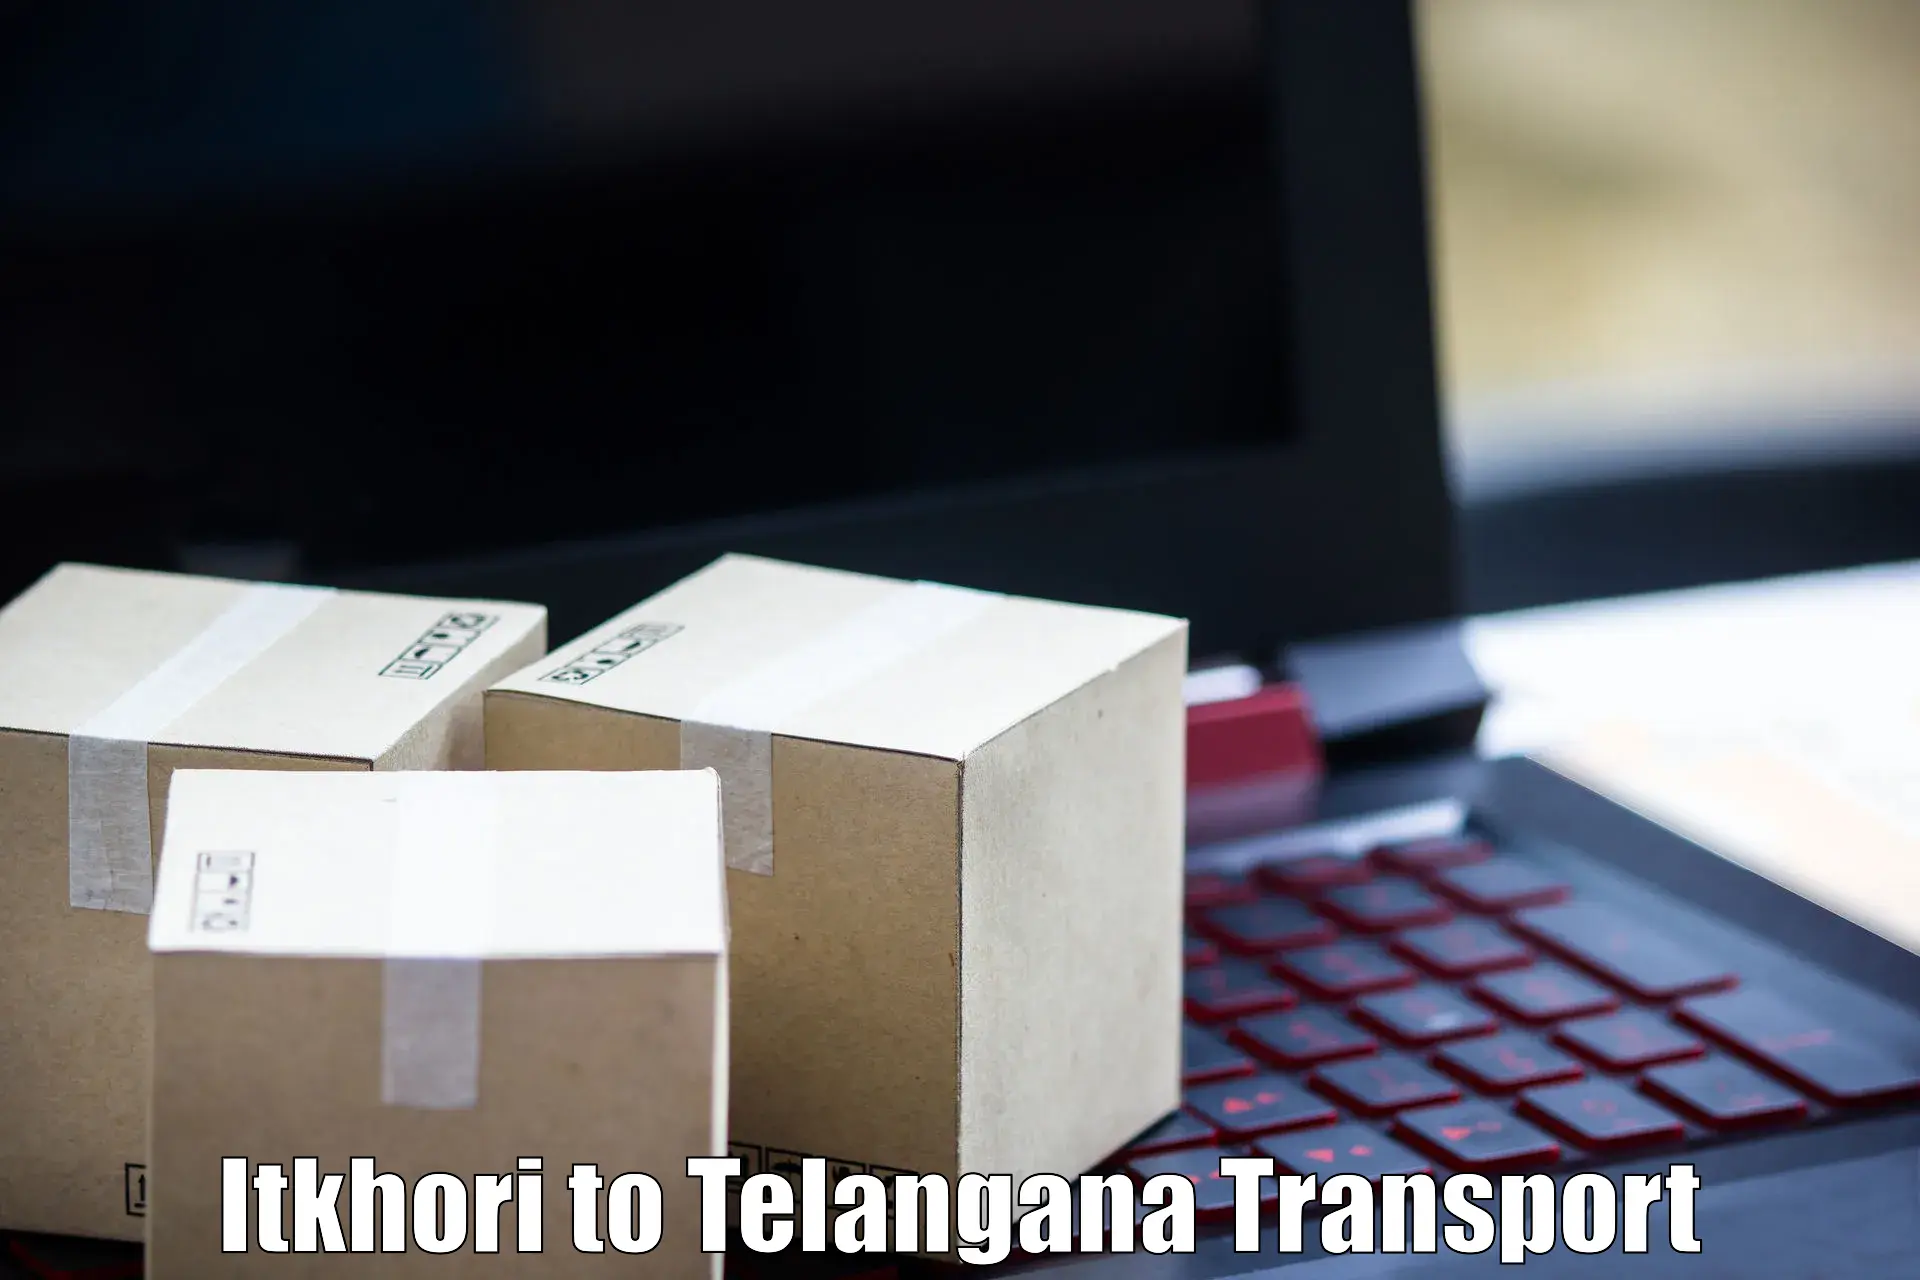 Delivery service Itkhori to Manuguru